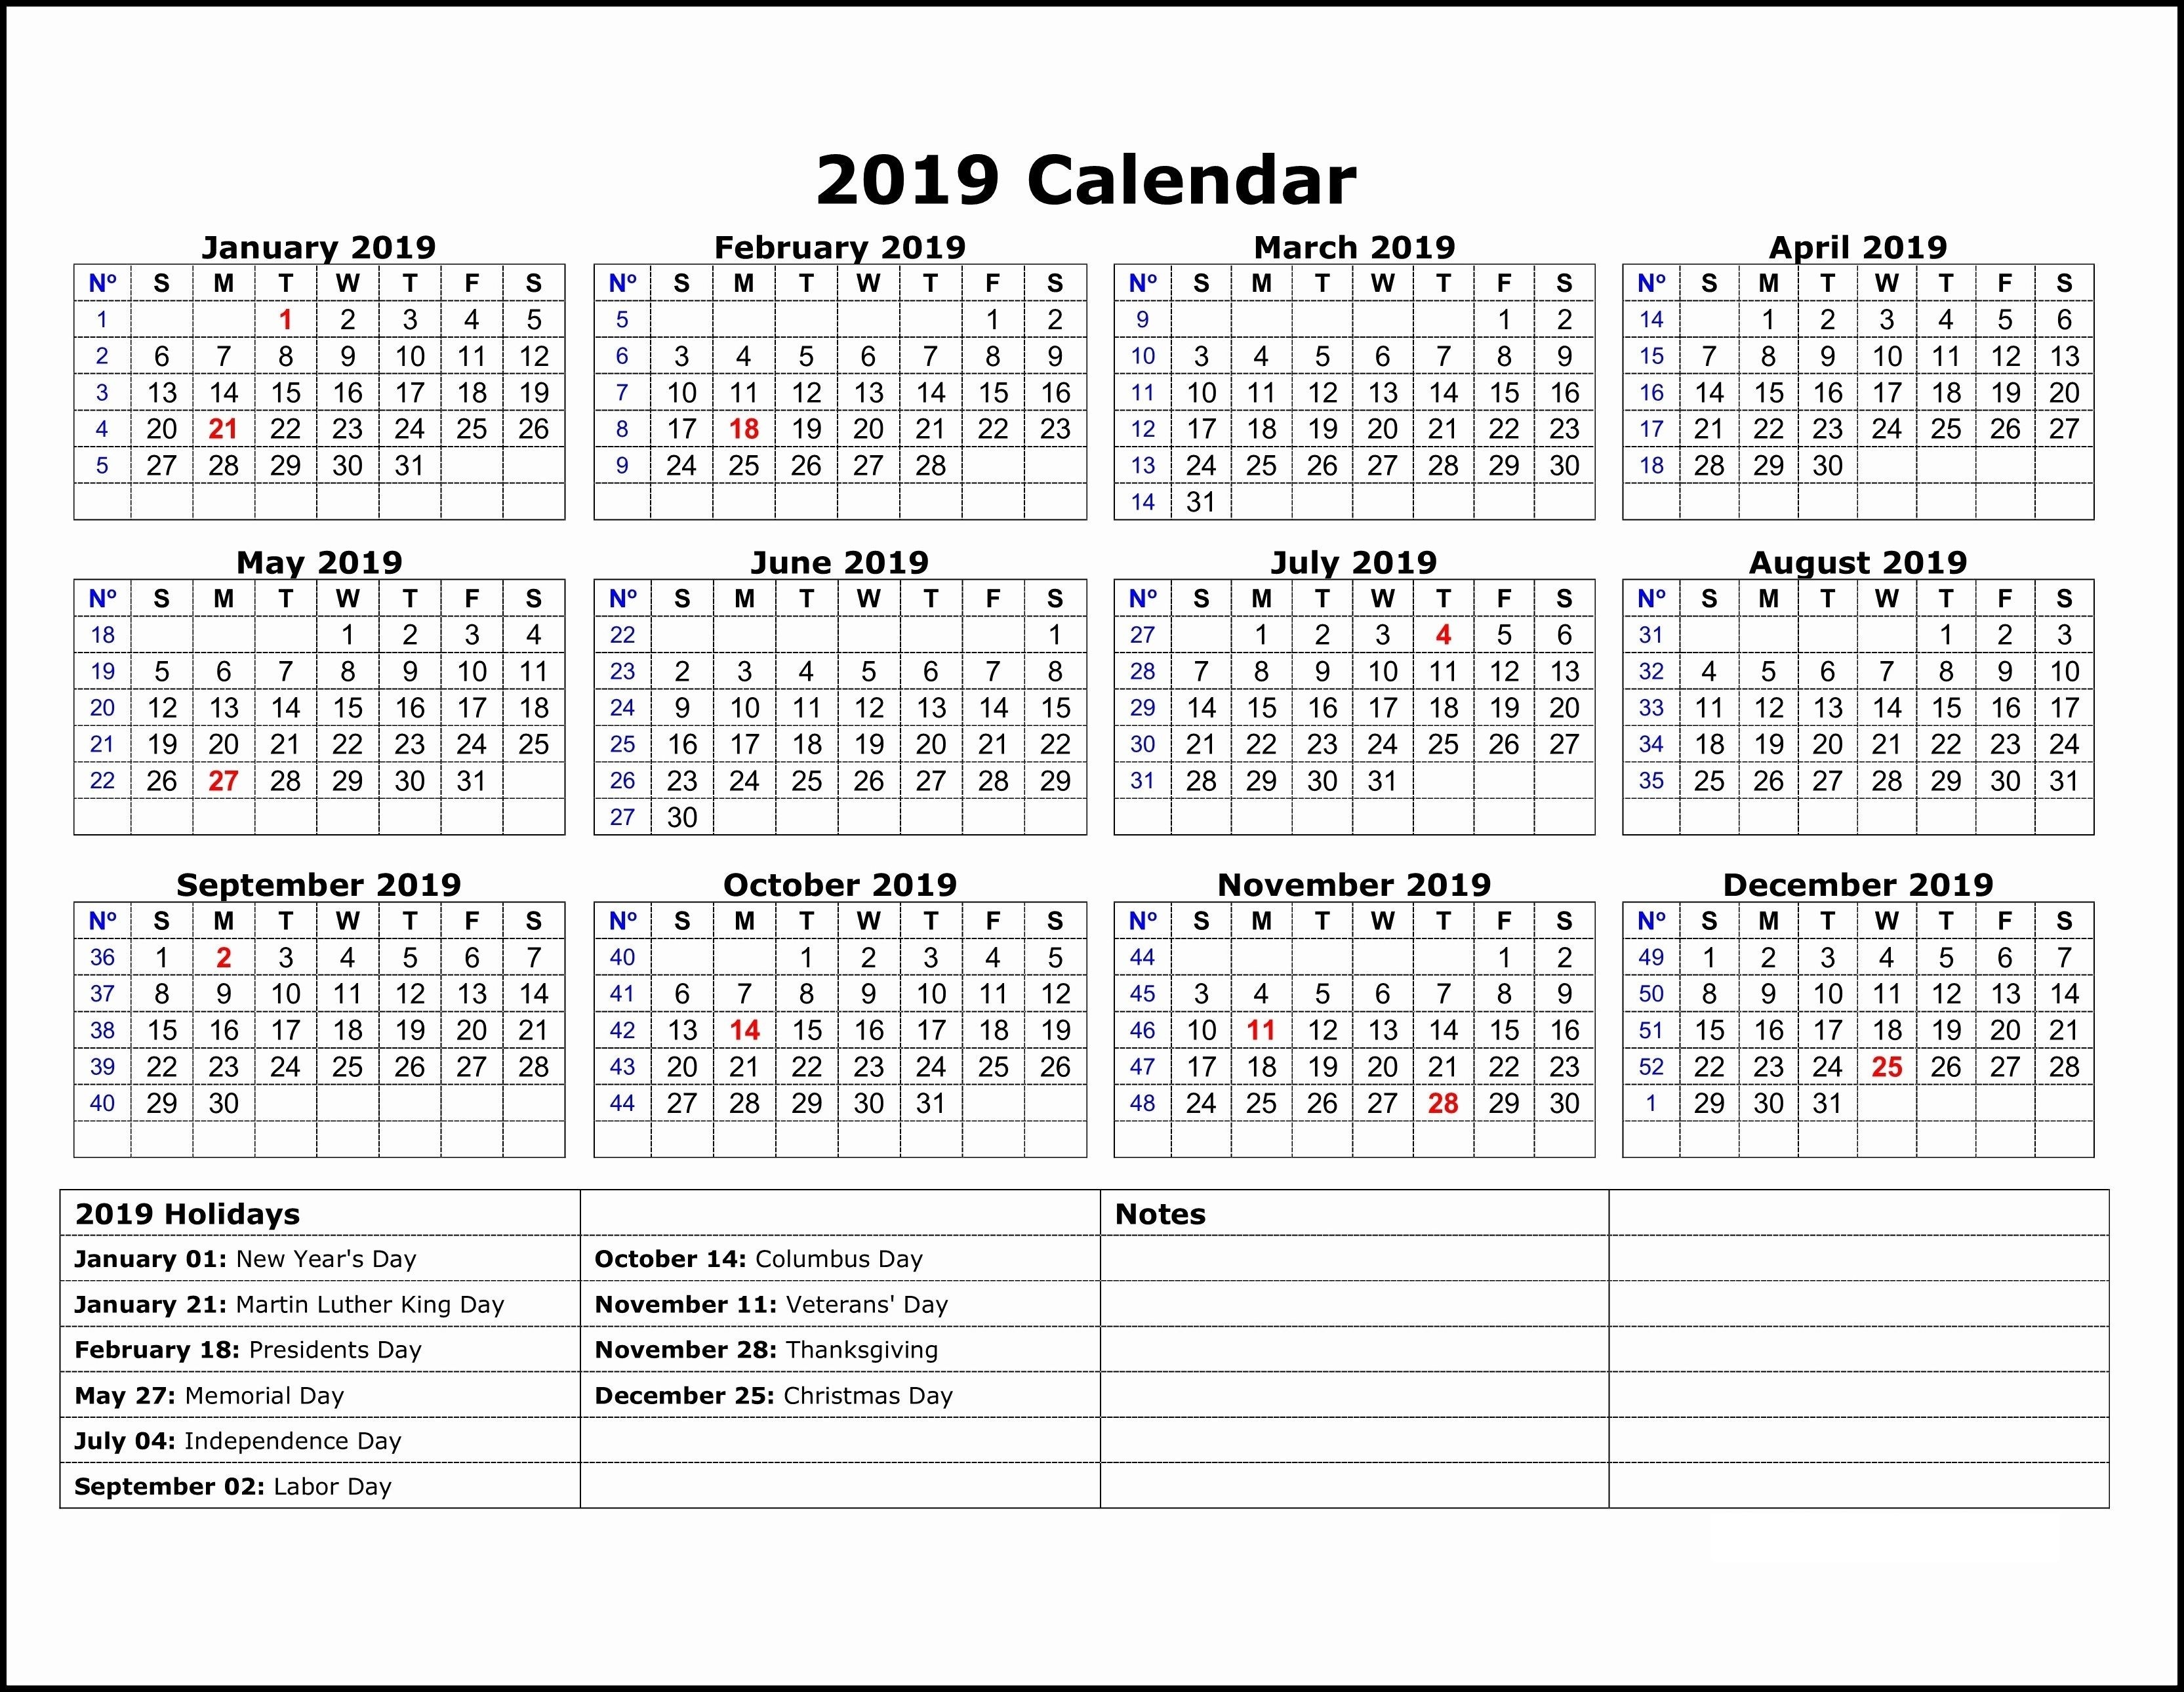 2019 Calendar Template One Note | 2019 Calendar Template In-Blank Calendar School Year Printable